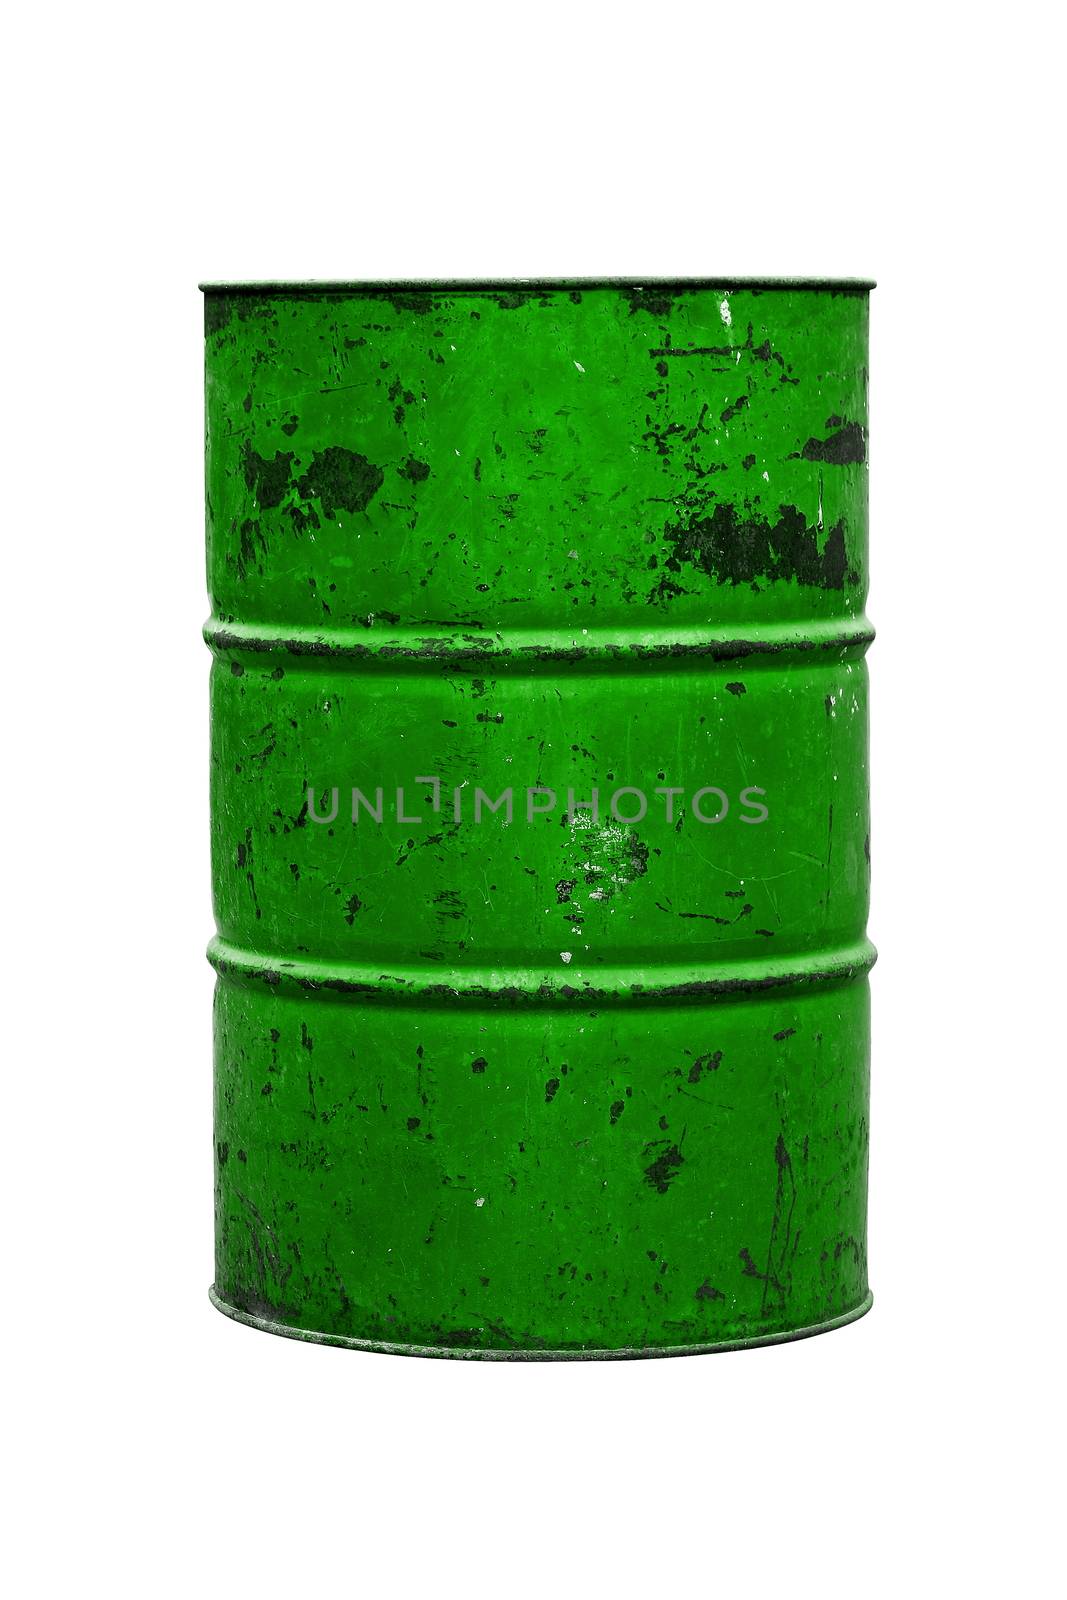 Barrel Oil green Old isolated on background white, bin bag garbage, Bin,Trash, Garbage, Rubbish,